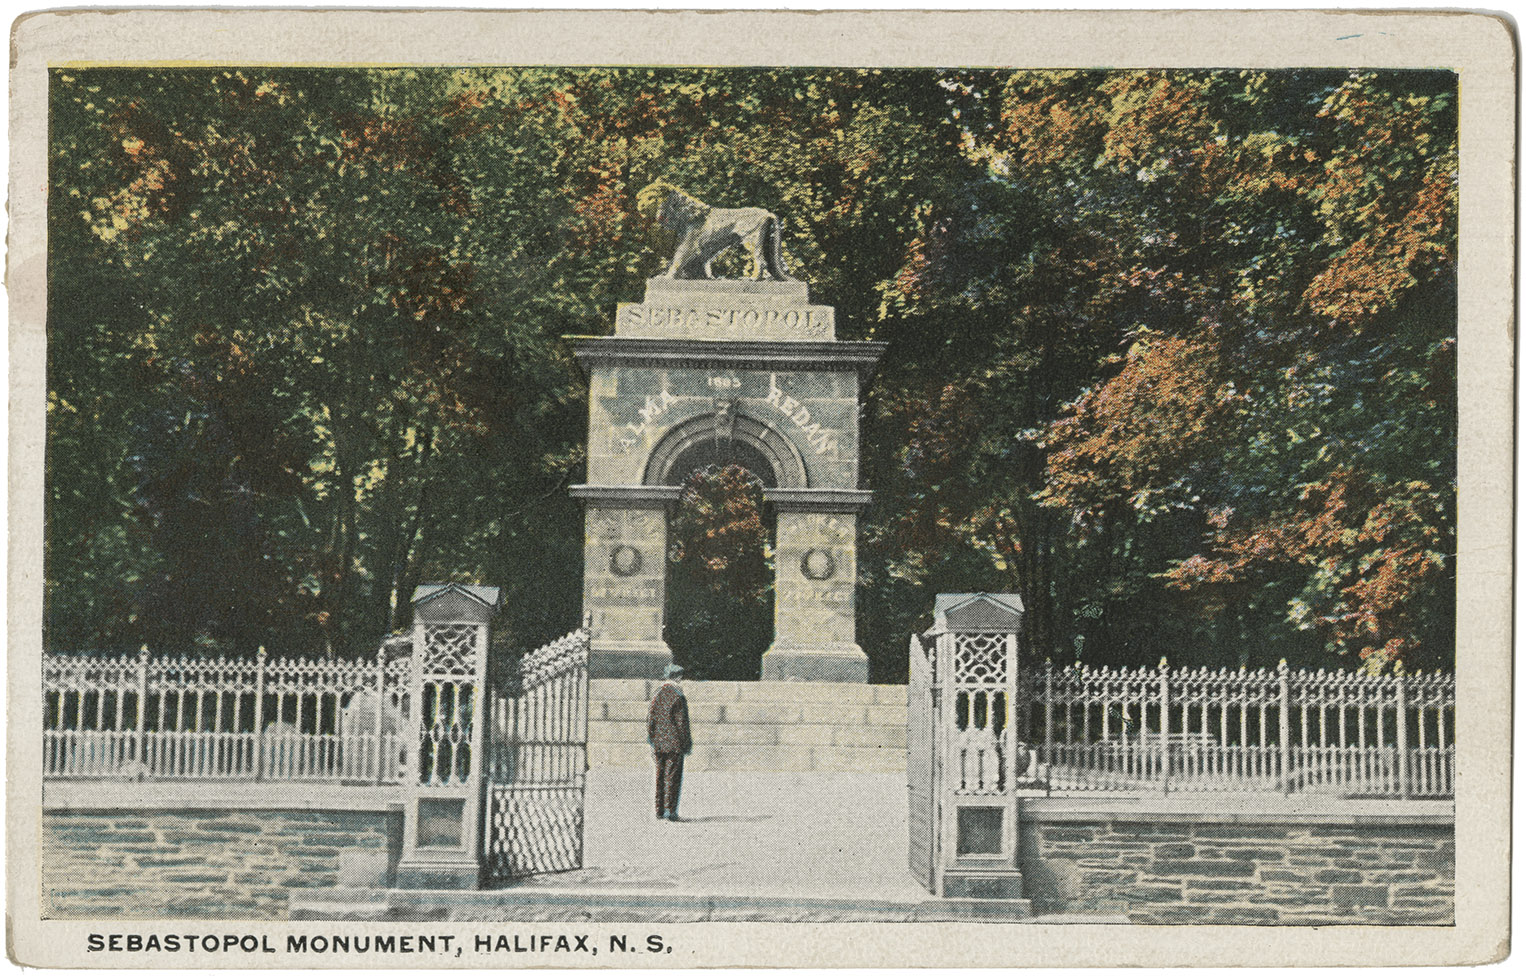 communityalbums - Sebastopol Monument, Halifax, N.S.